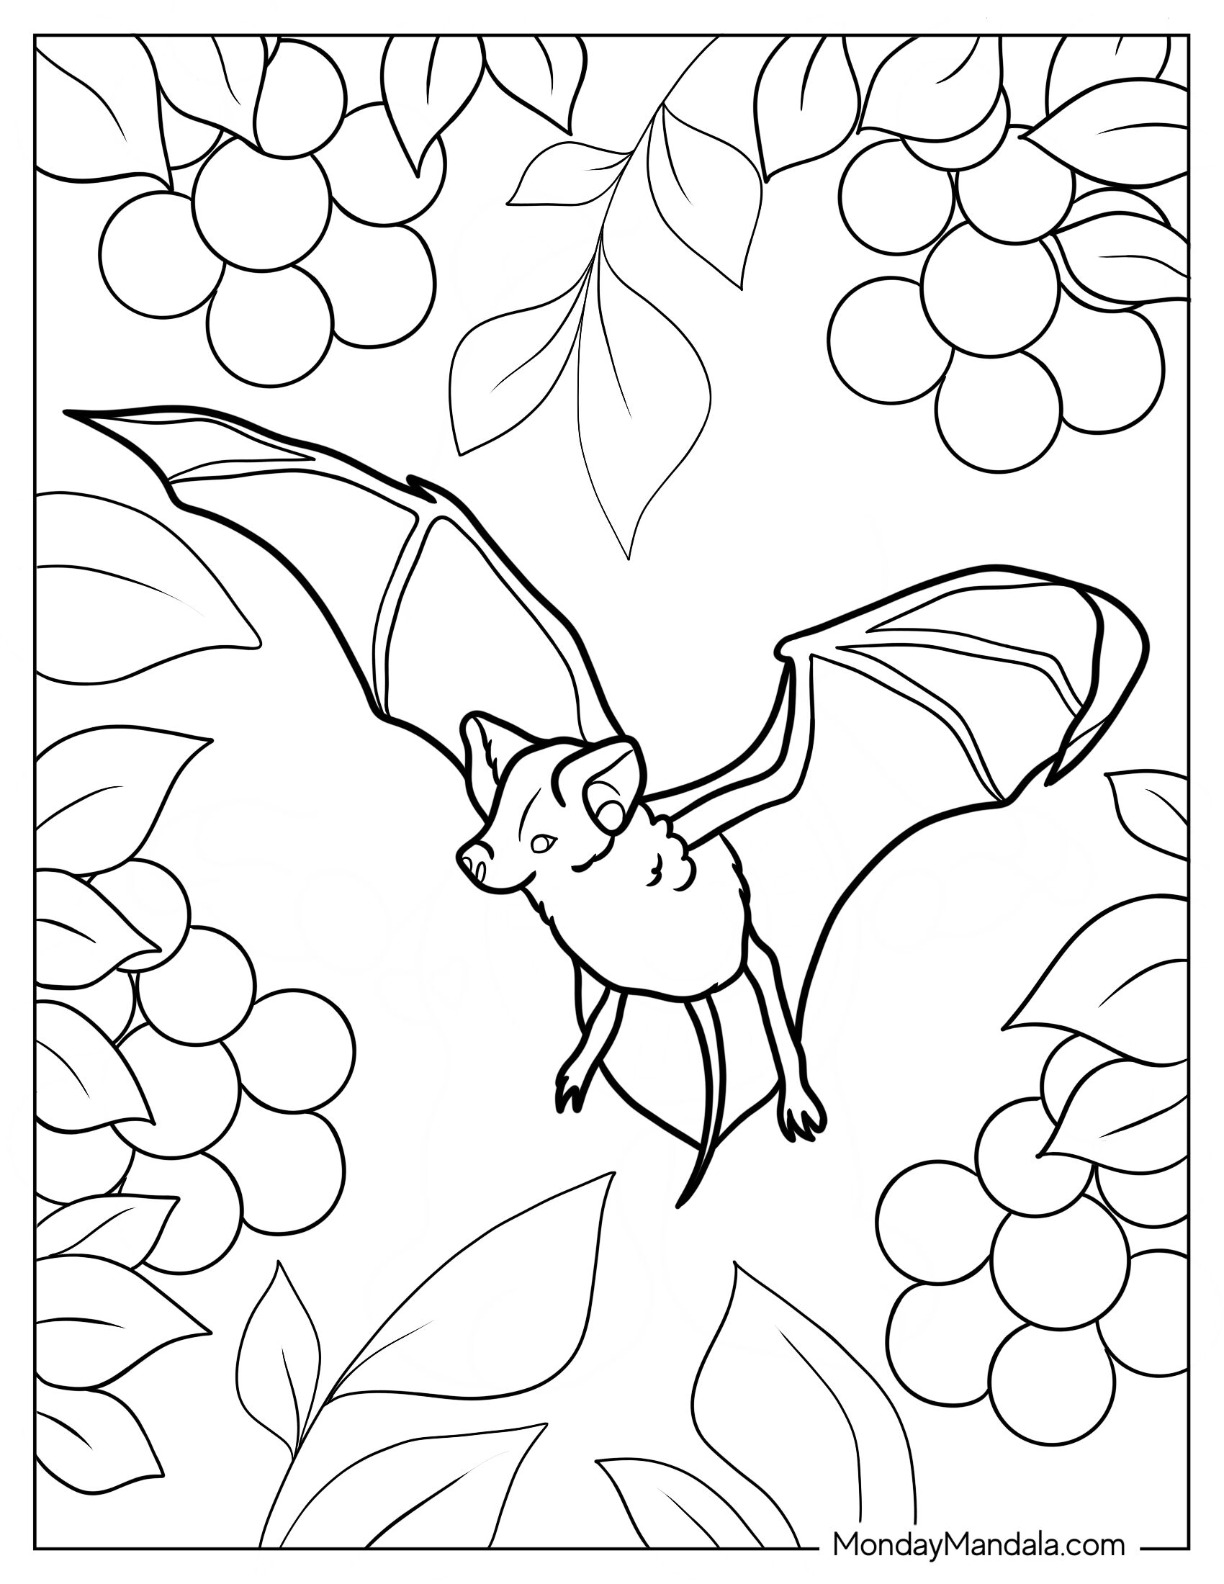 Bat coloring pages free pdf printables